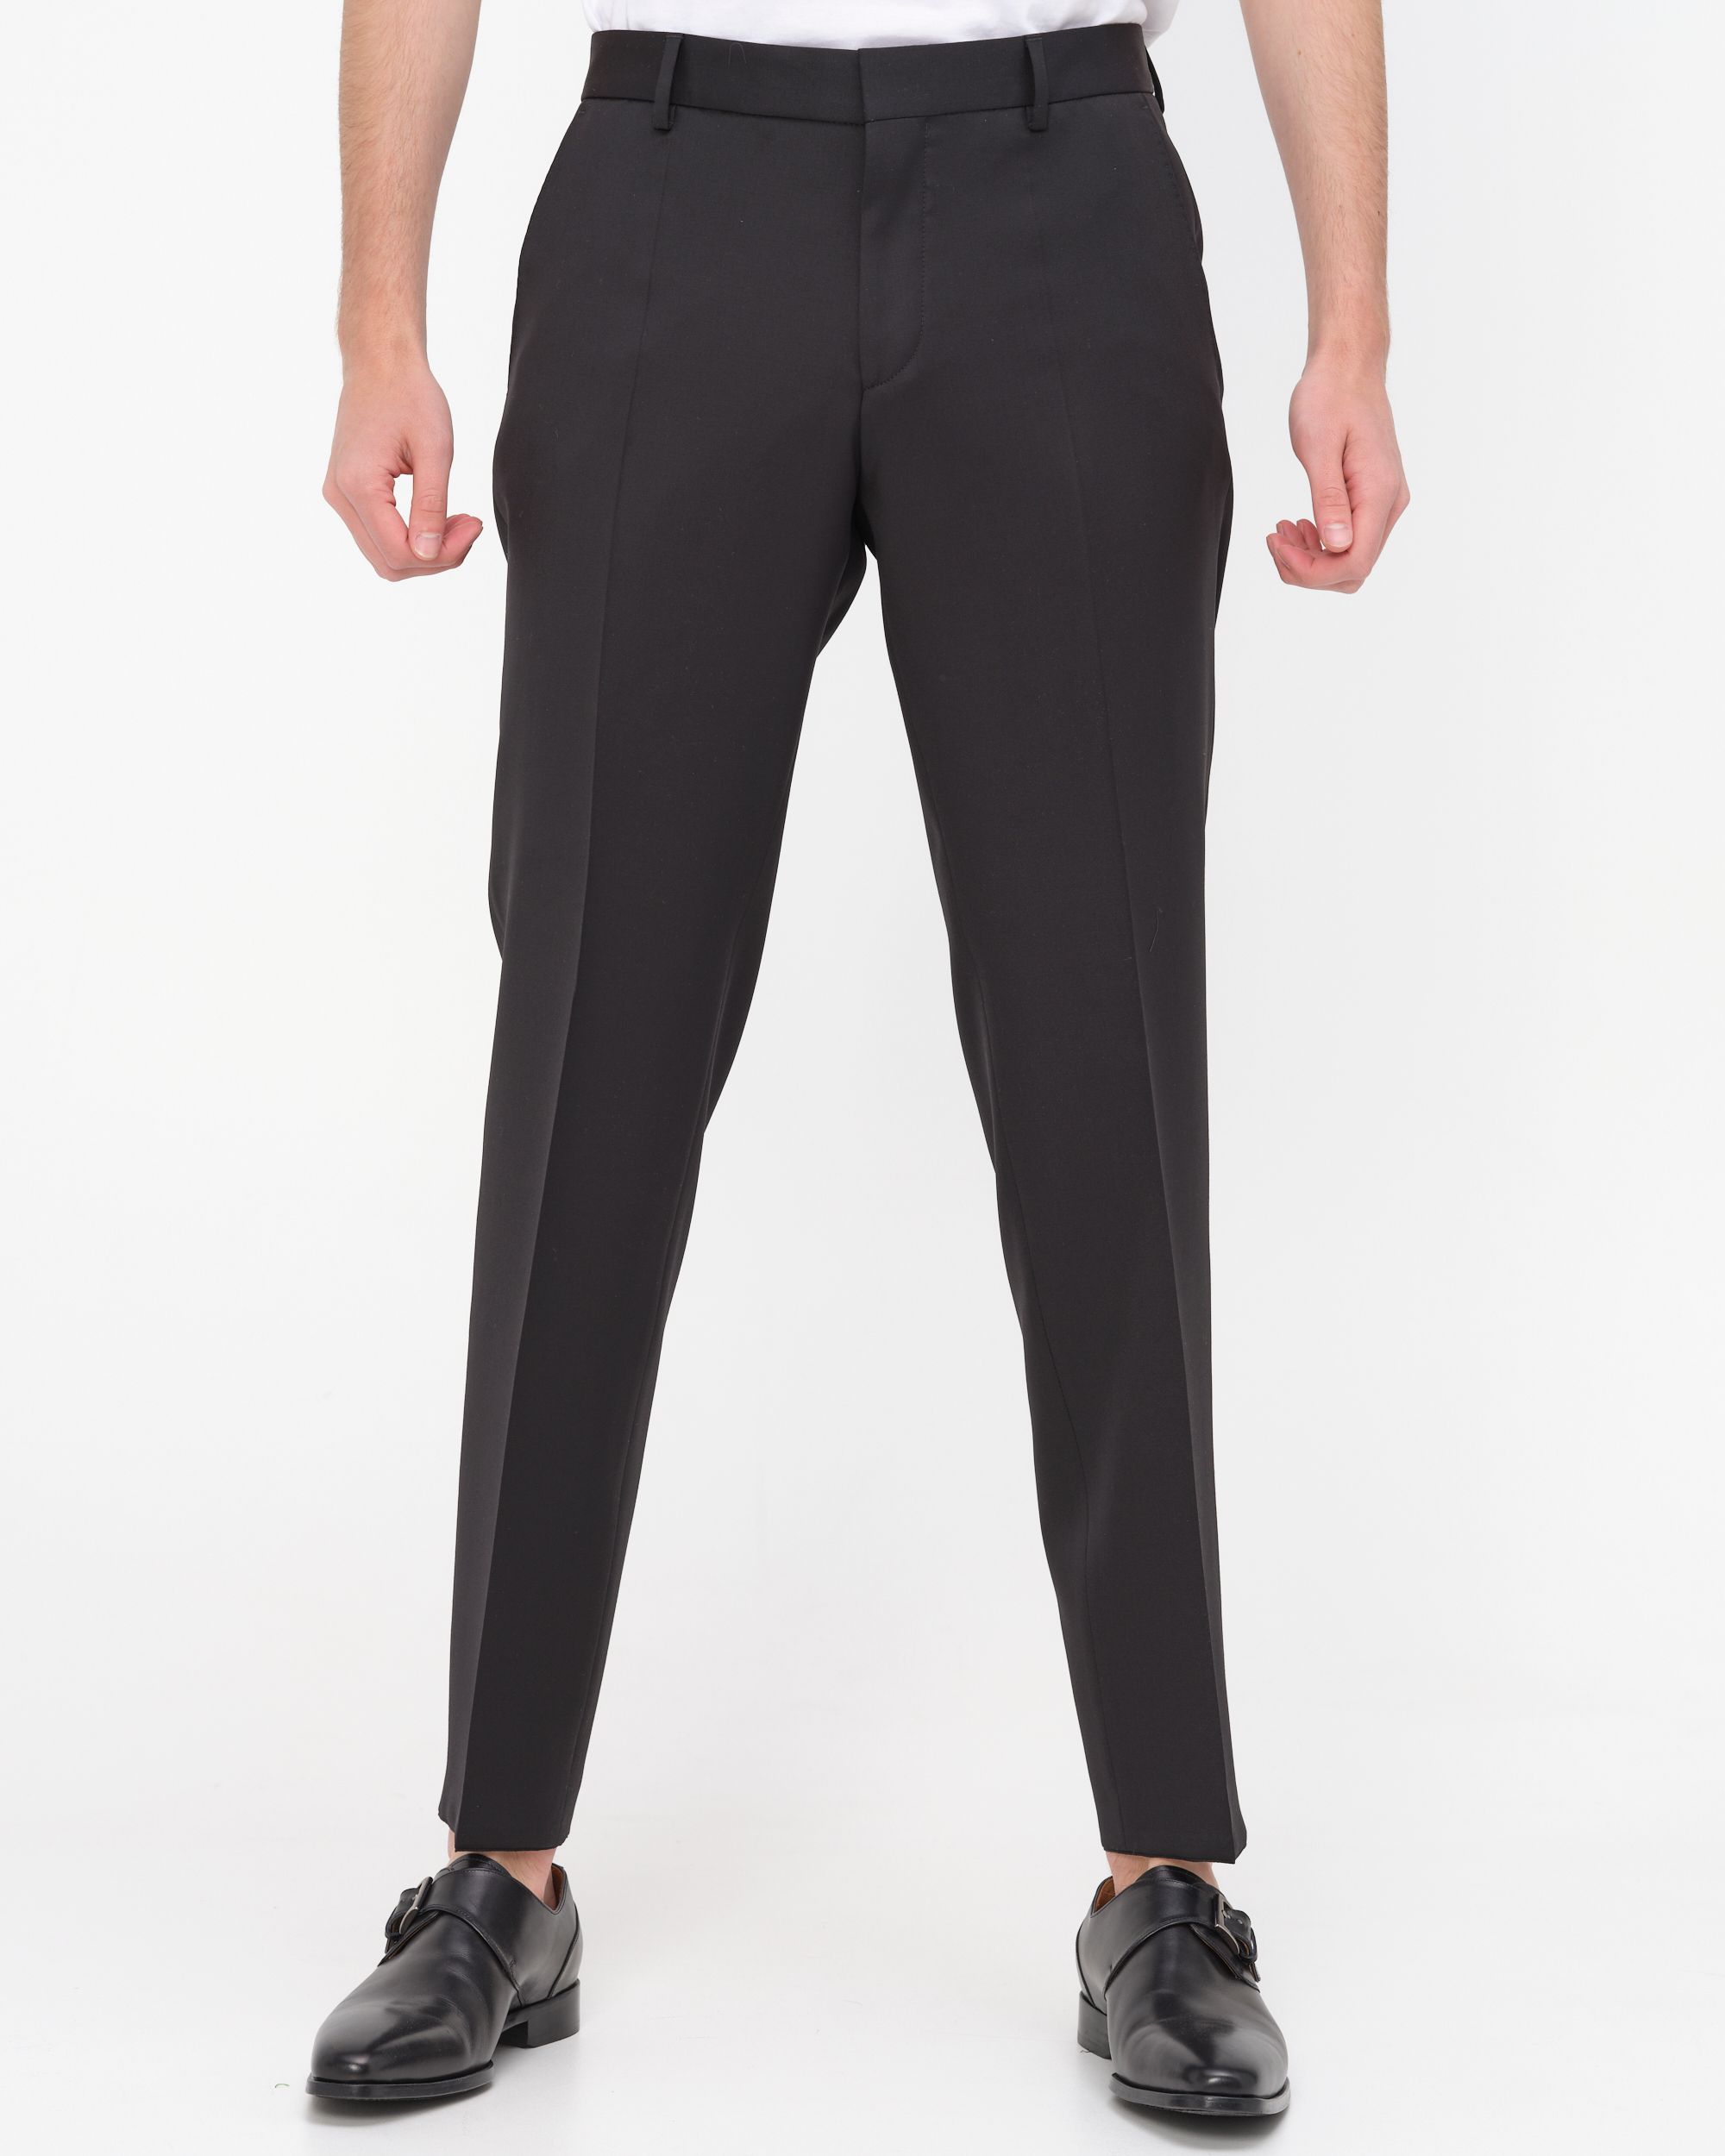 Hugo Boss Menswear Mix & Match Pantalon Zwart 075744-001-102